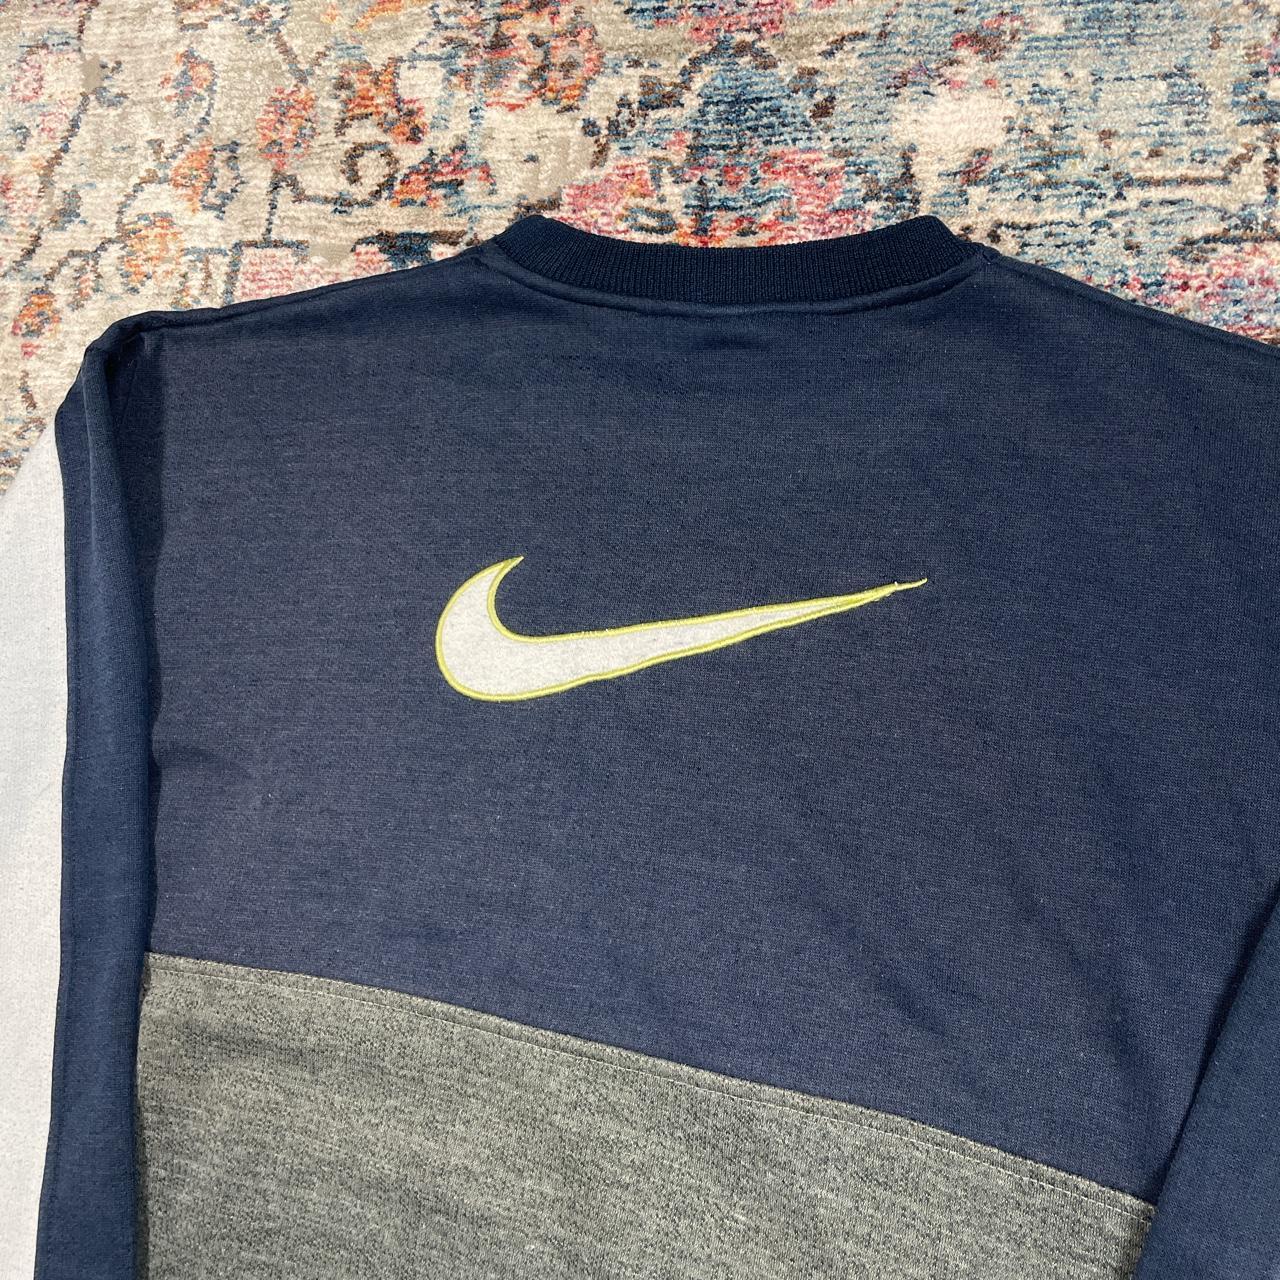 Vintage Nike Navy and Grey Large Embroidered Swoosh Sweatshirt